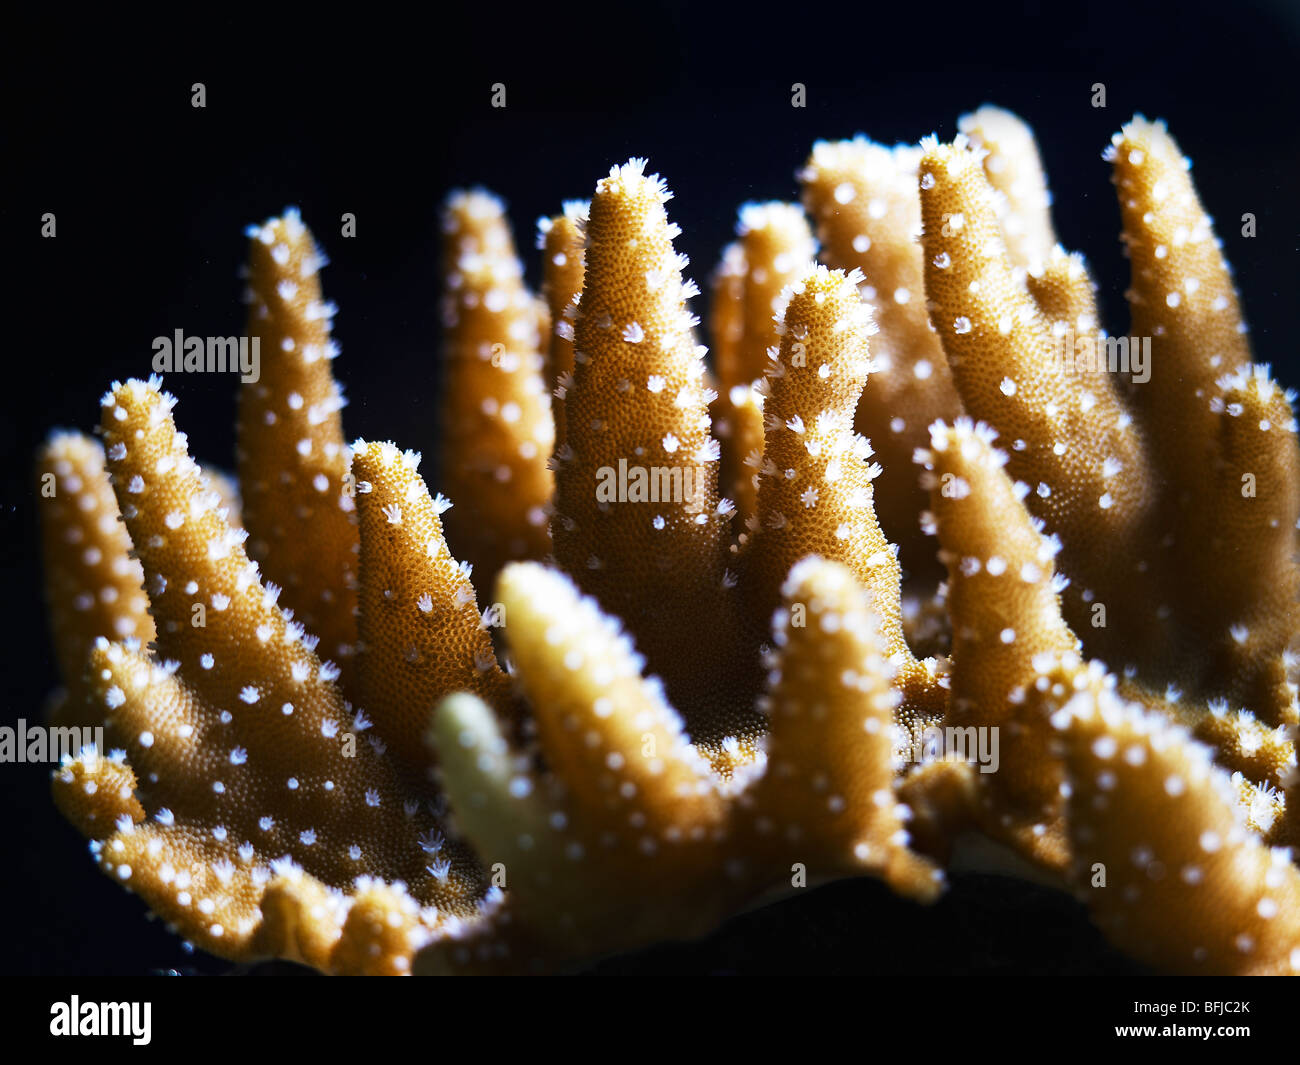 Devilfinger leather Lobophytum species soft coral with extended polyps Stock Photo